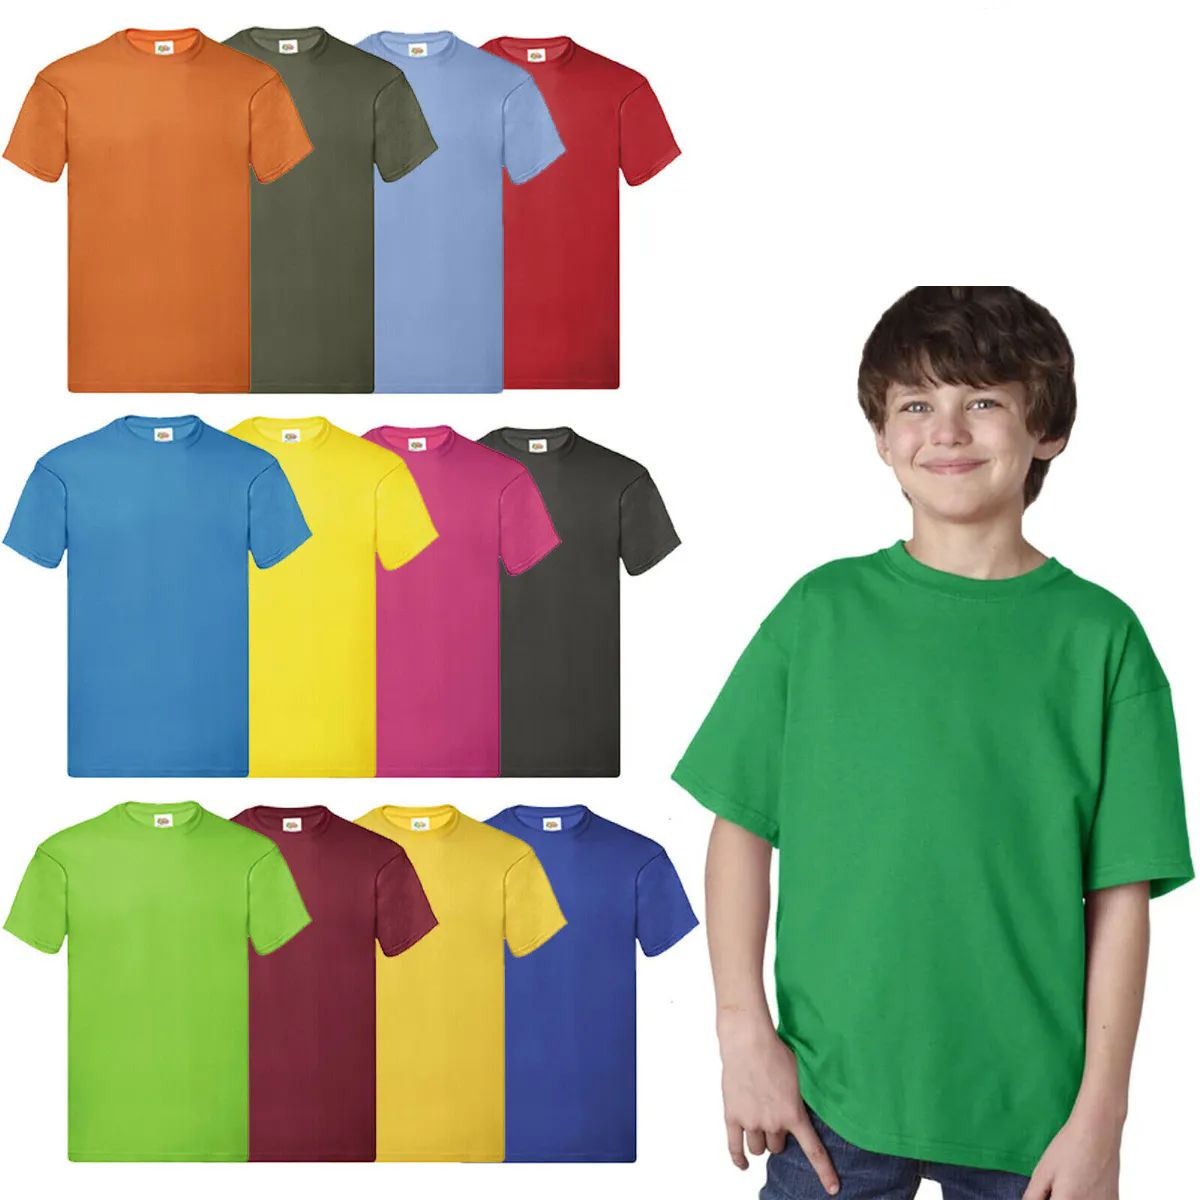 288 Bulk Billion Hats Kids Youth Cotton Assorted Colors T Shirts Size M